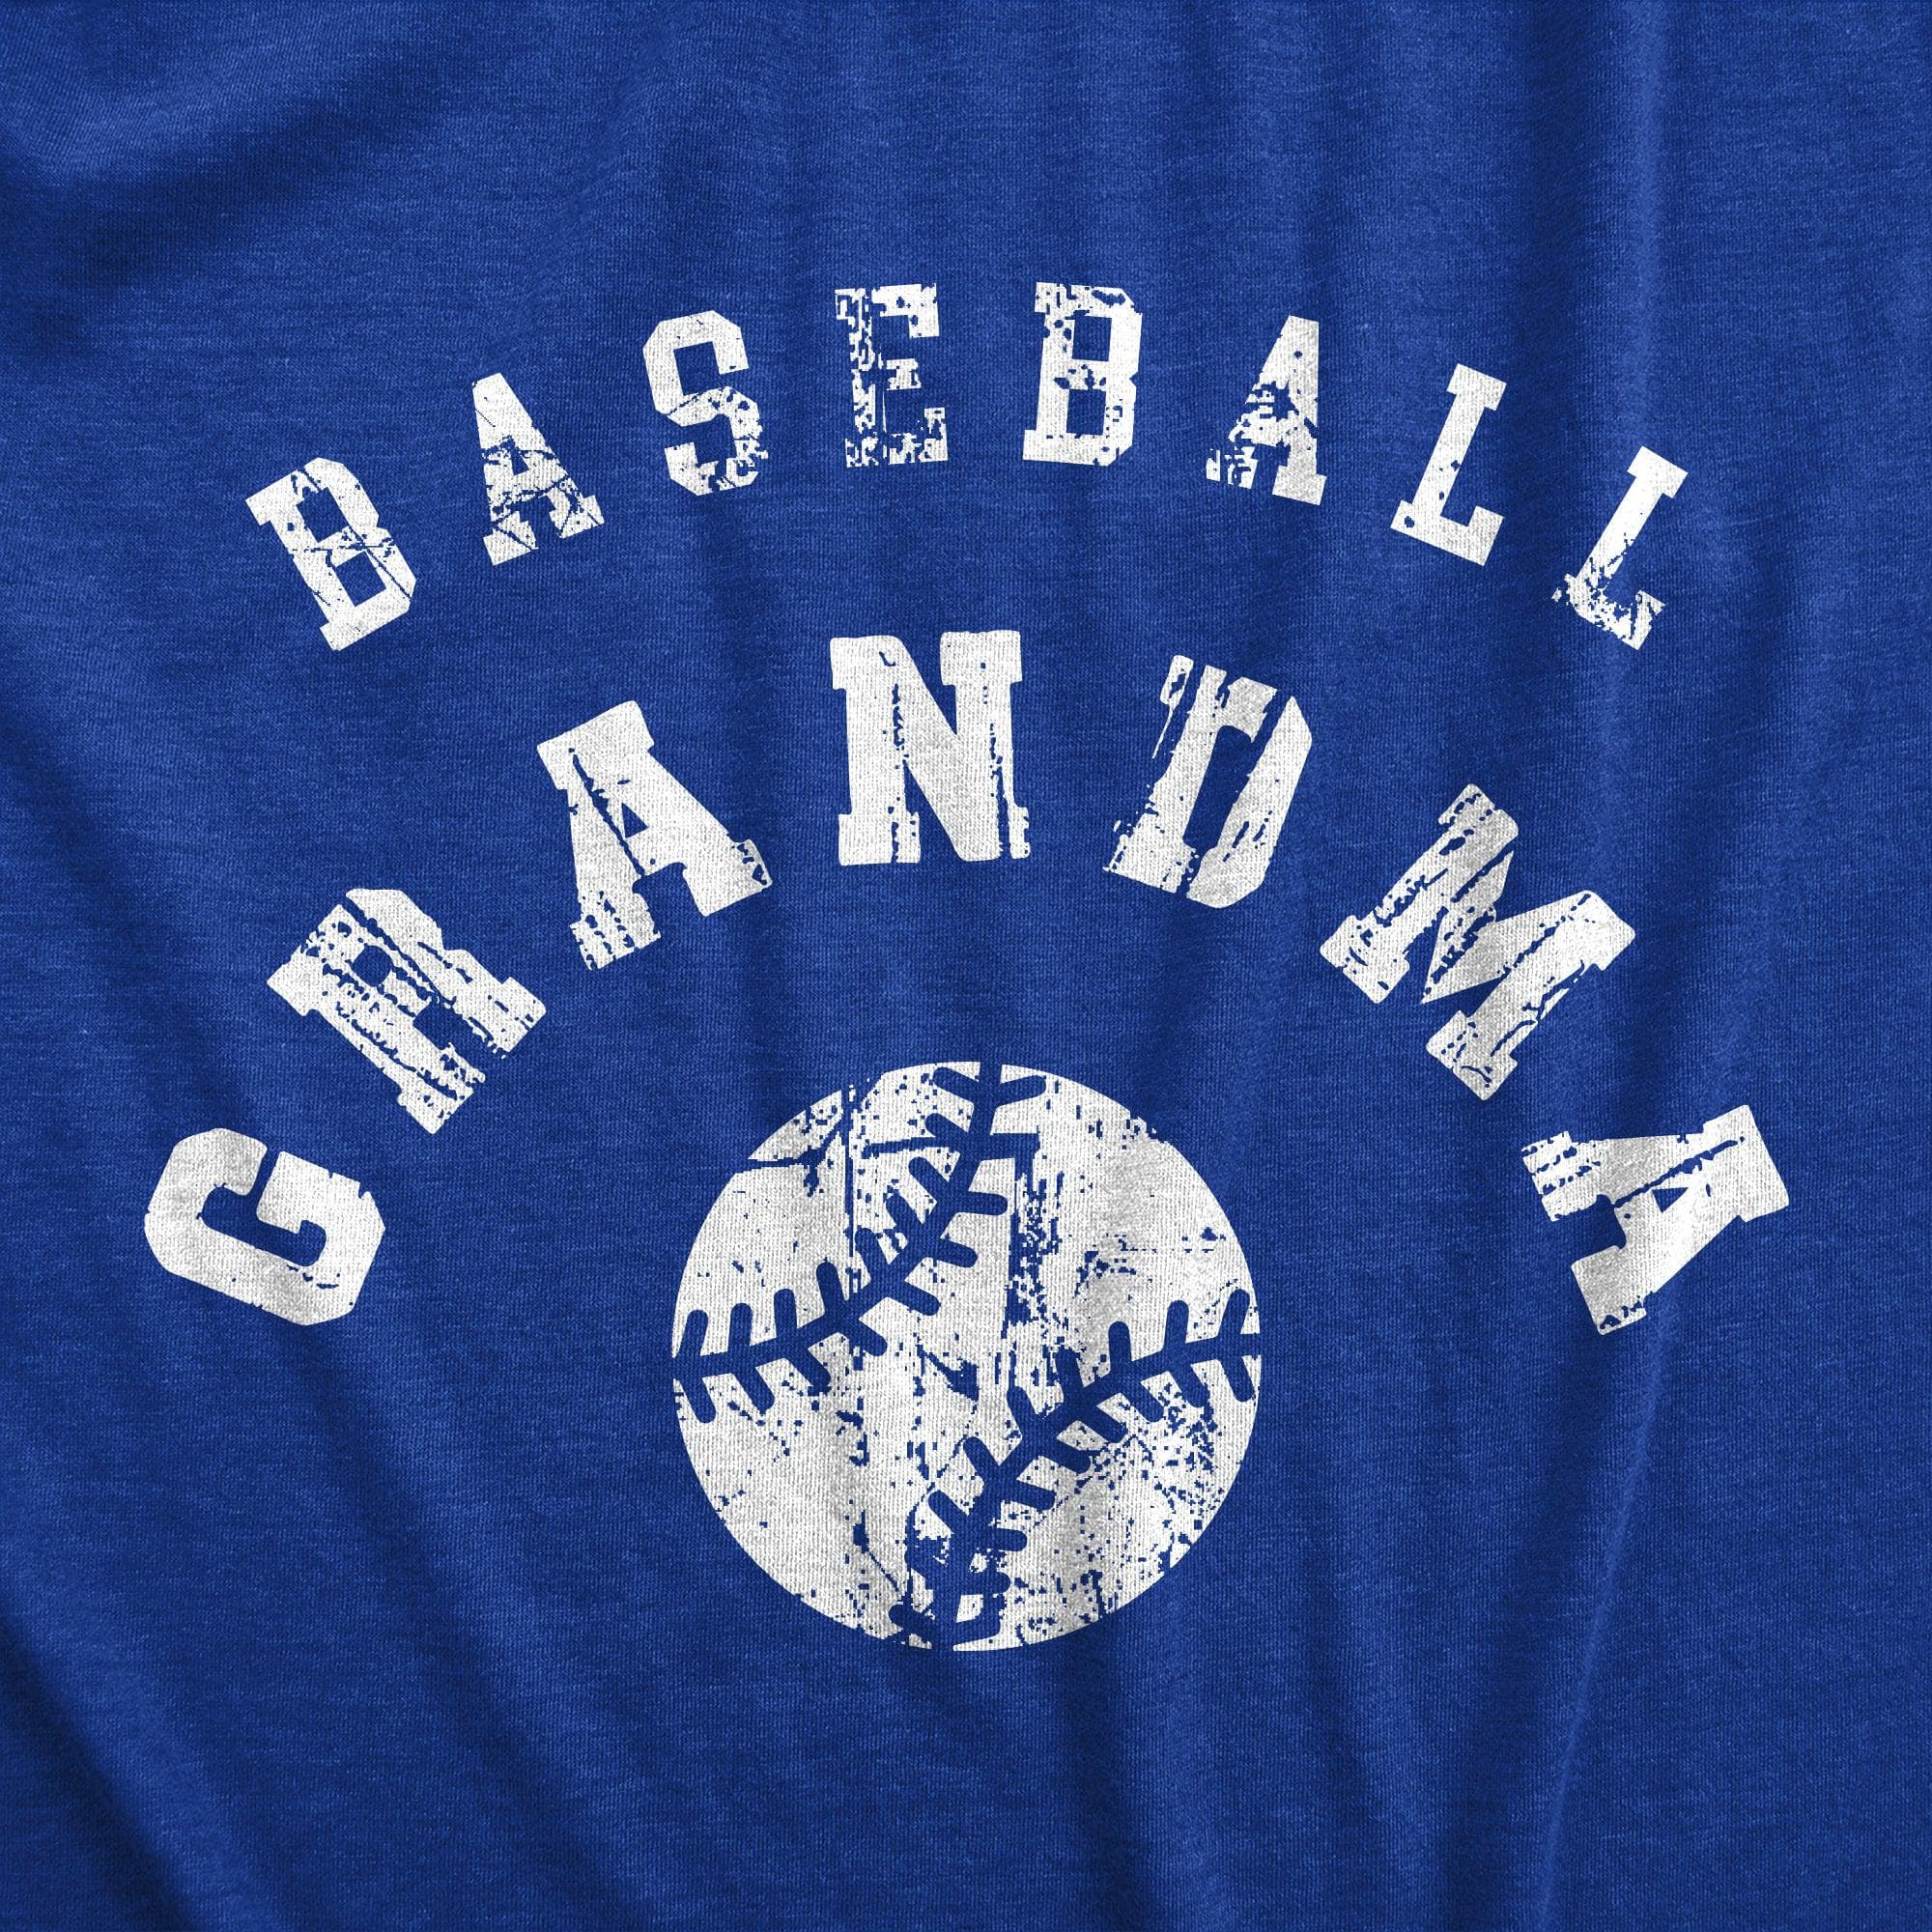 Baseball Grandma Women's Tshirt  -  Crazy Dog T-Shirts